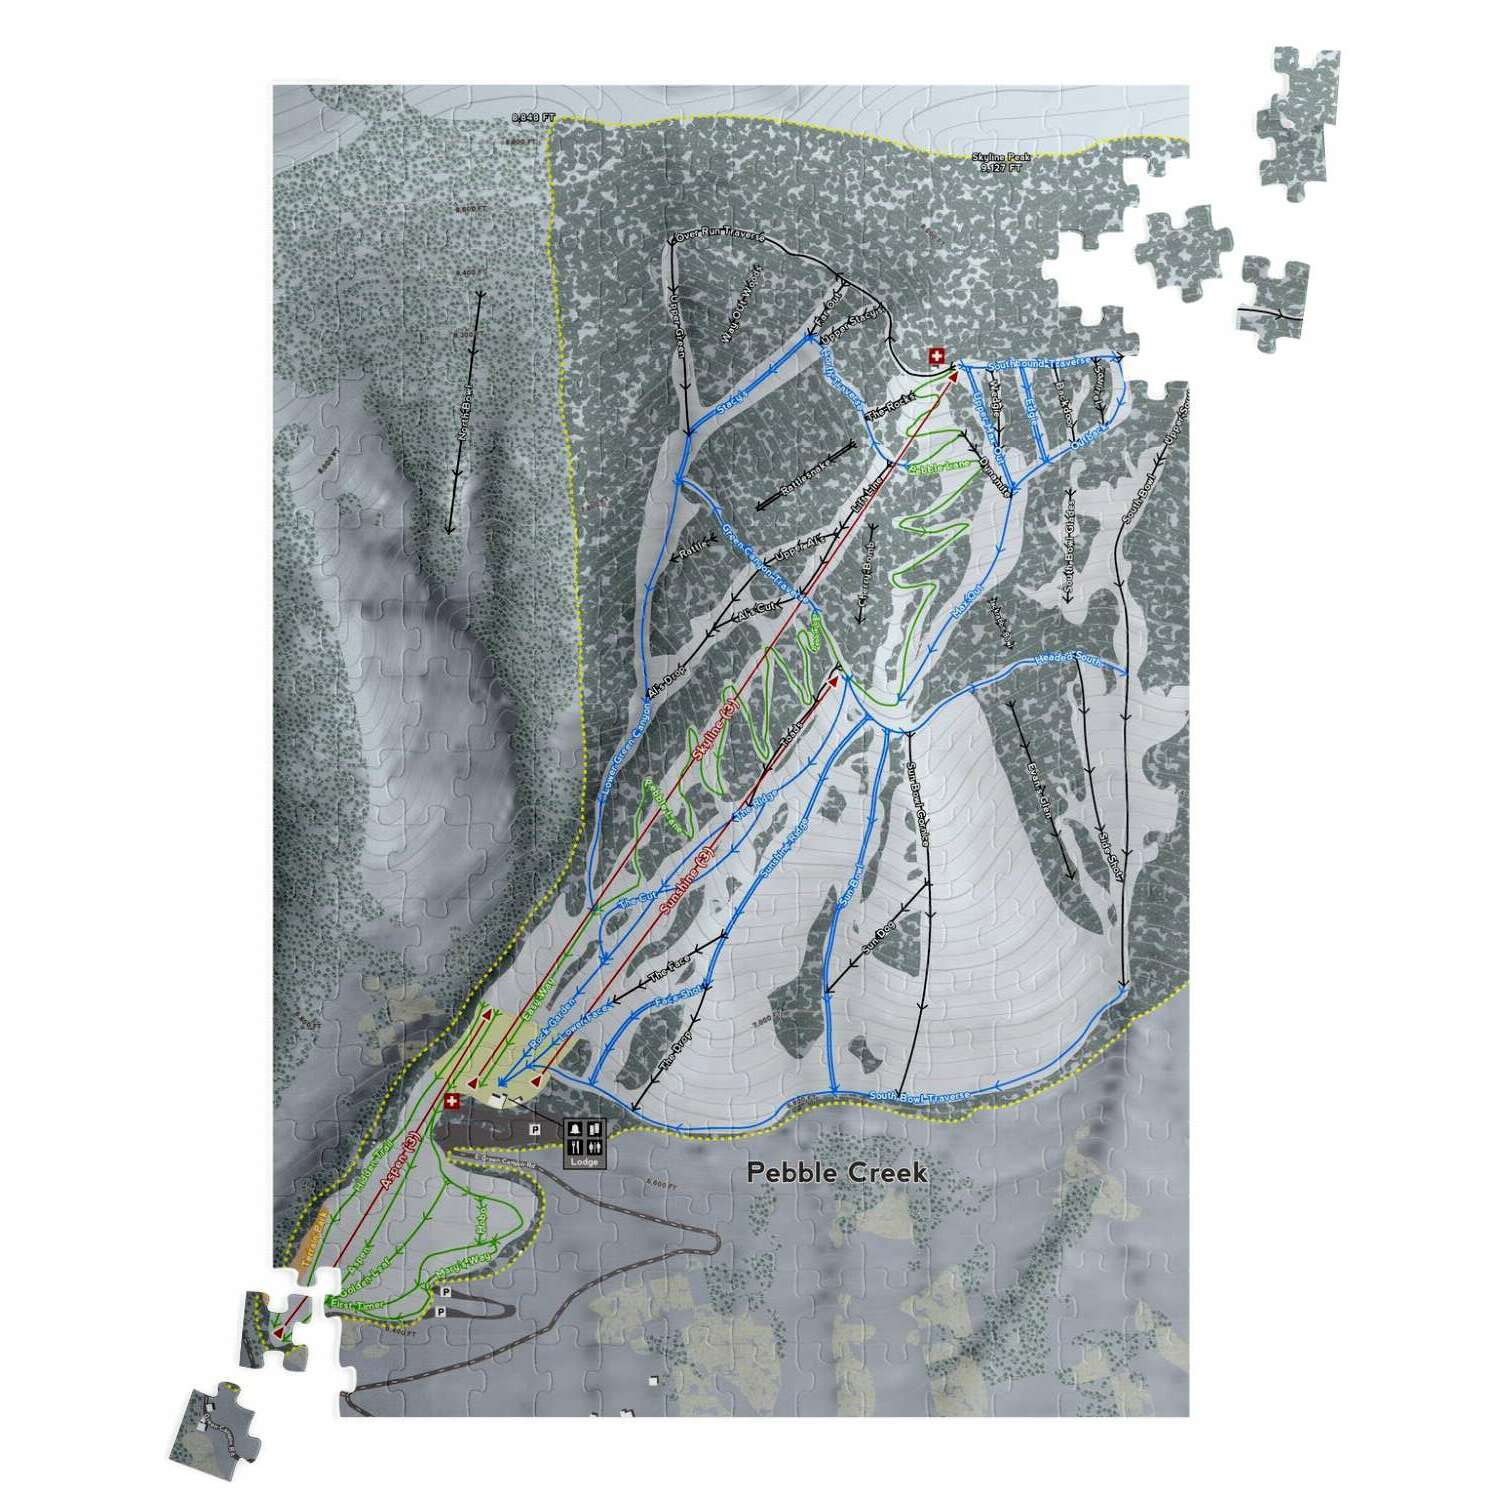 Pebble Creek, Idaho Ski Trail Map Puzzle - Powderaddicts